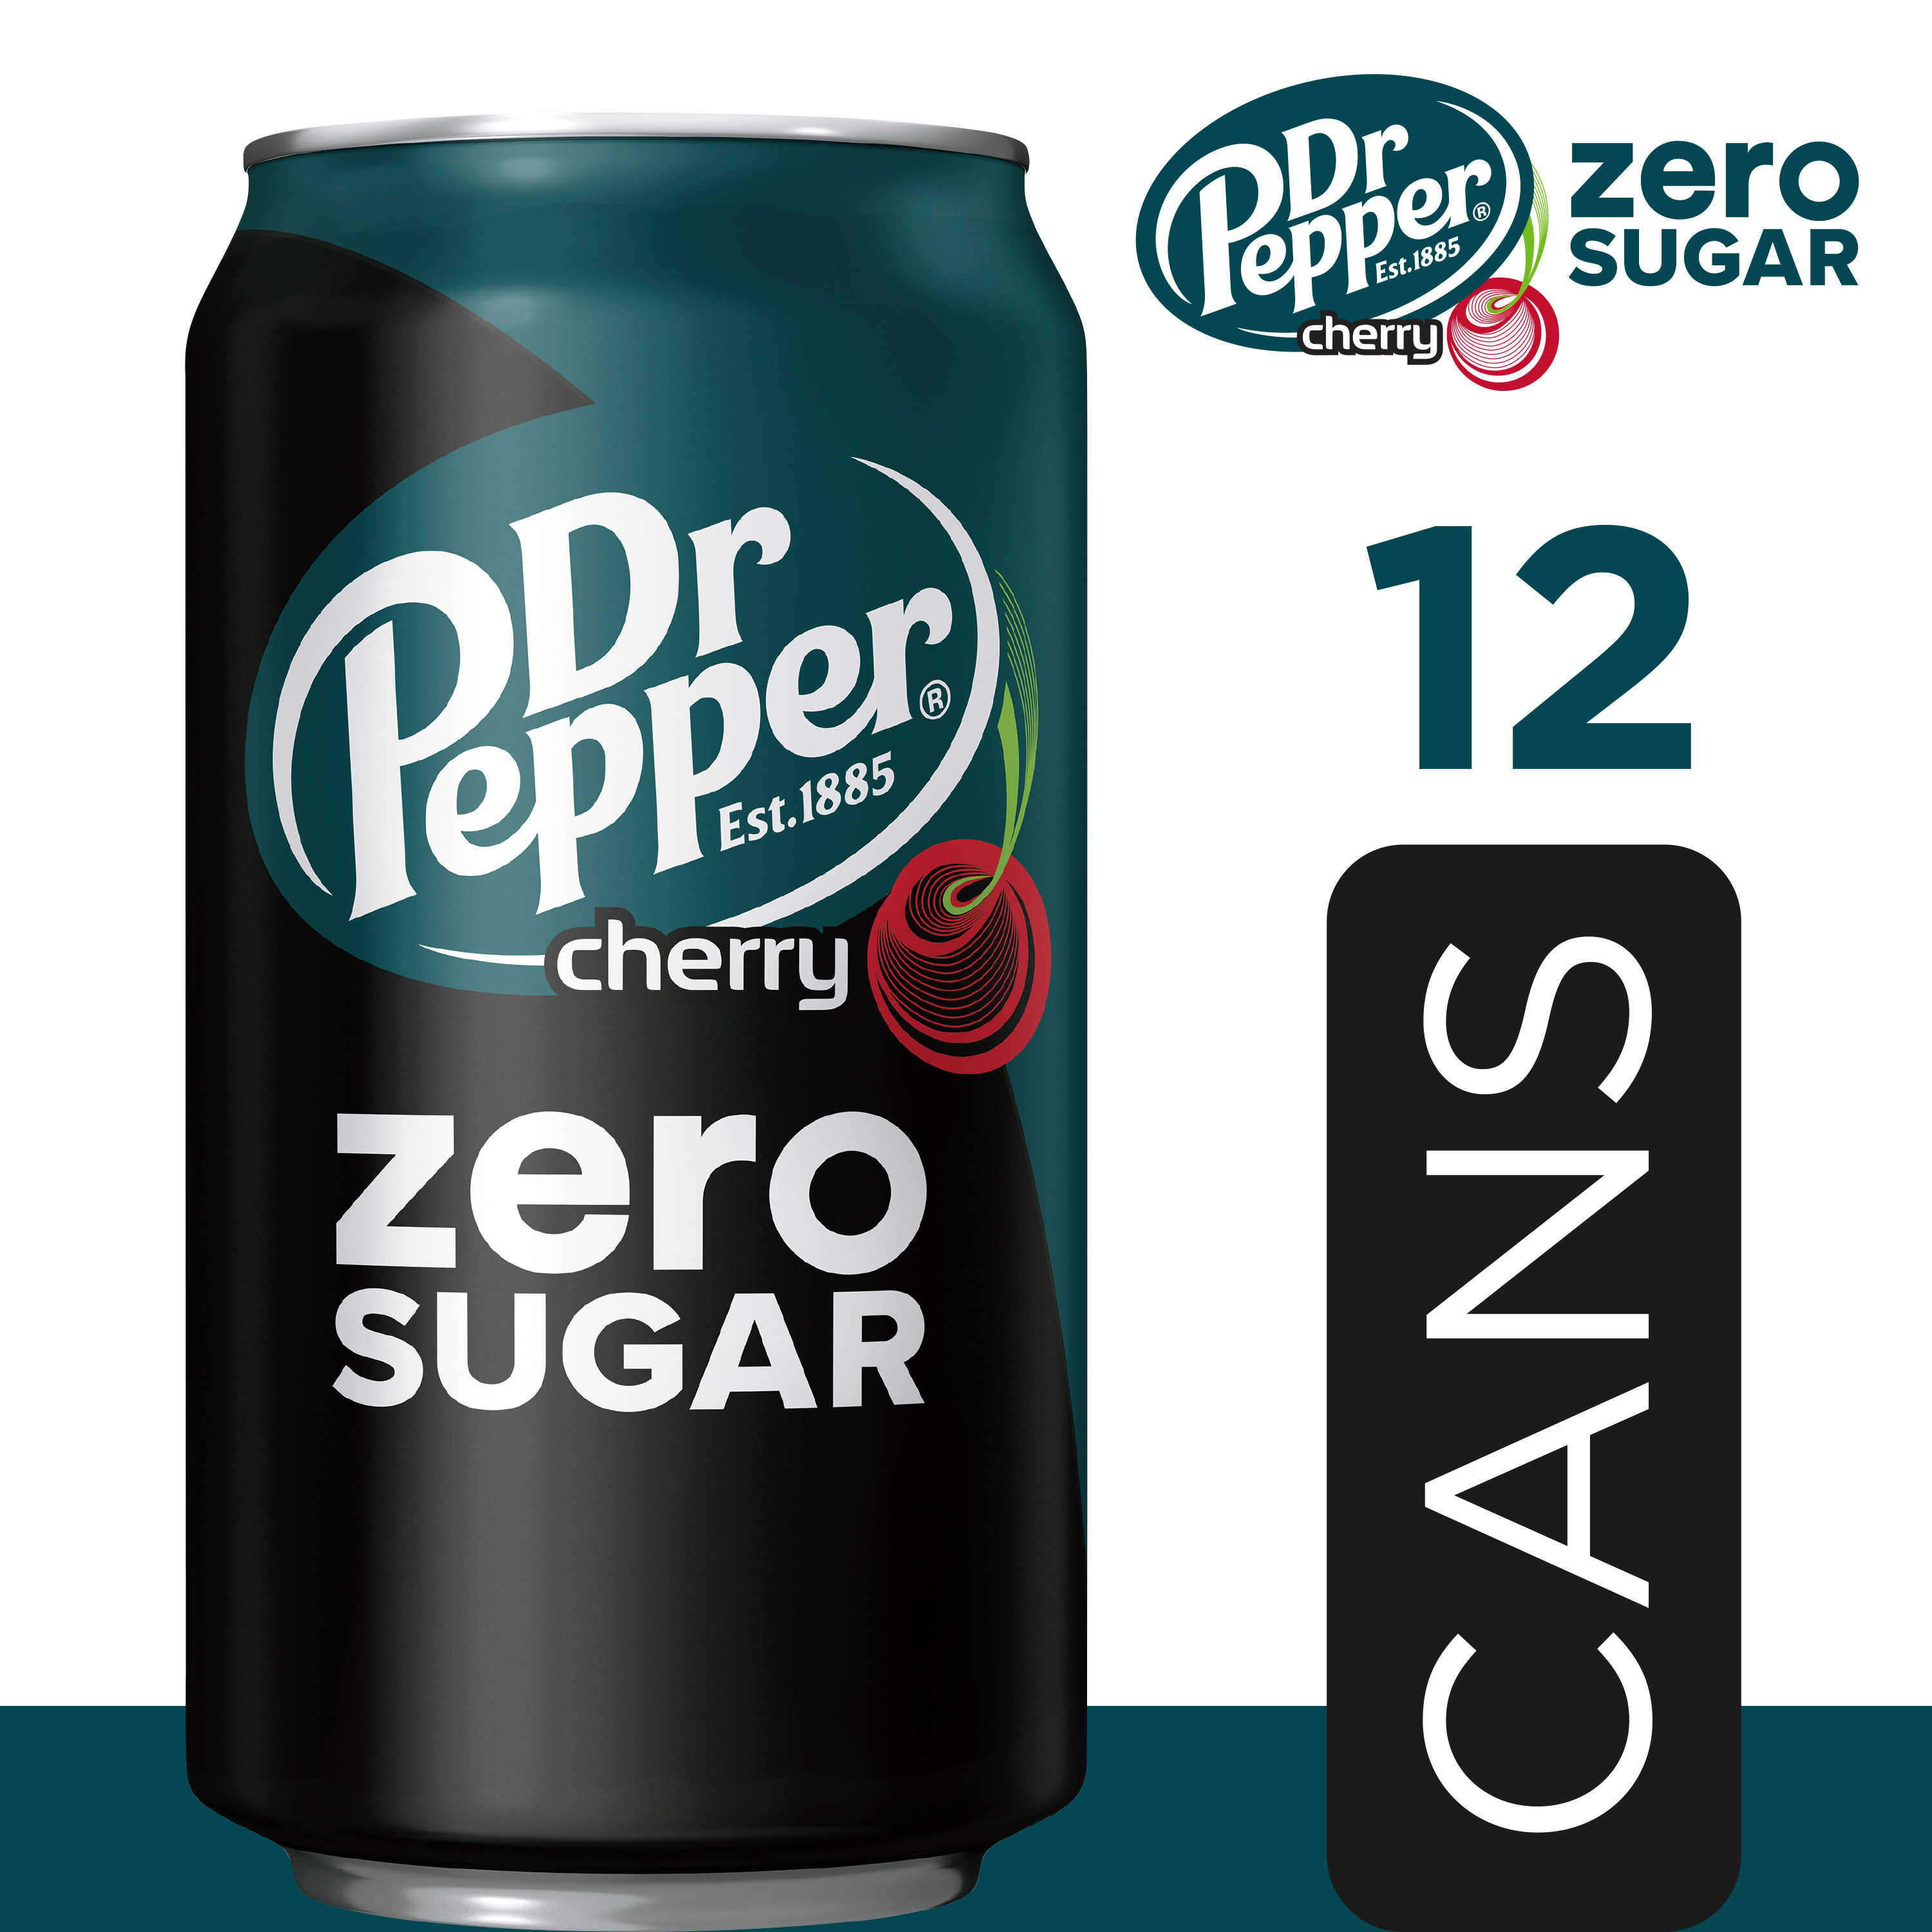 Dr Pepper Zero Sugar Cherry Soda Pop, 12 fl oz, 12 Pack Cans - image 2 of 12